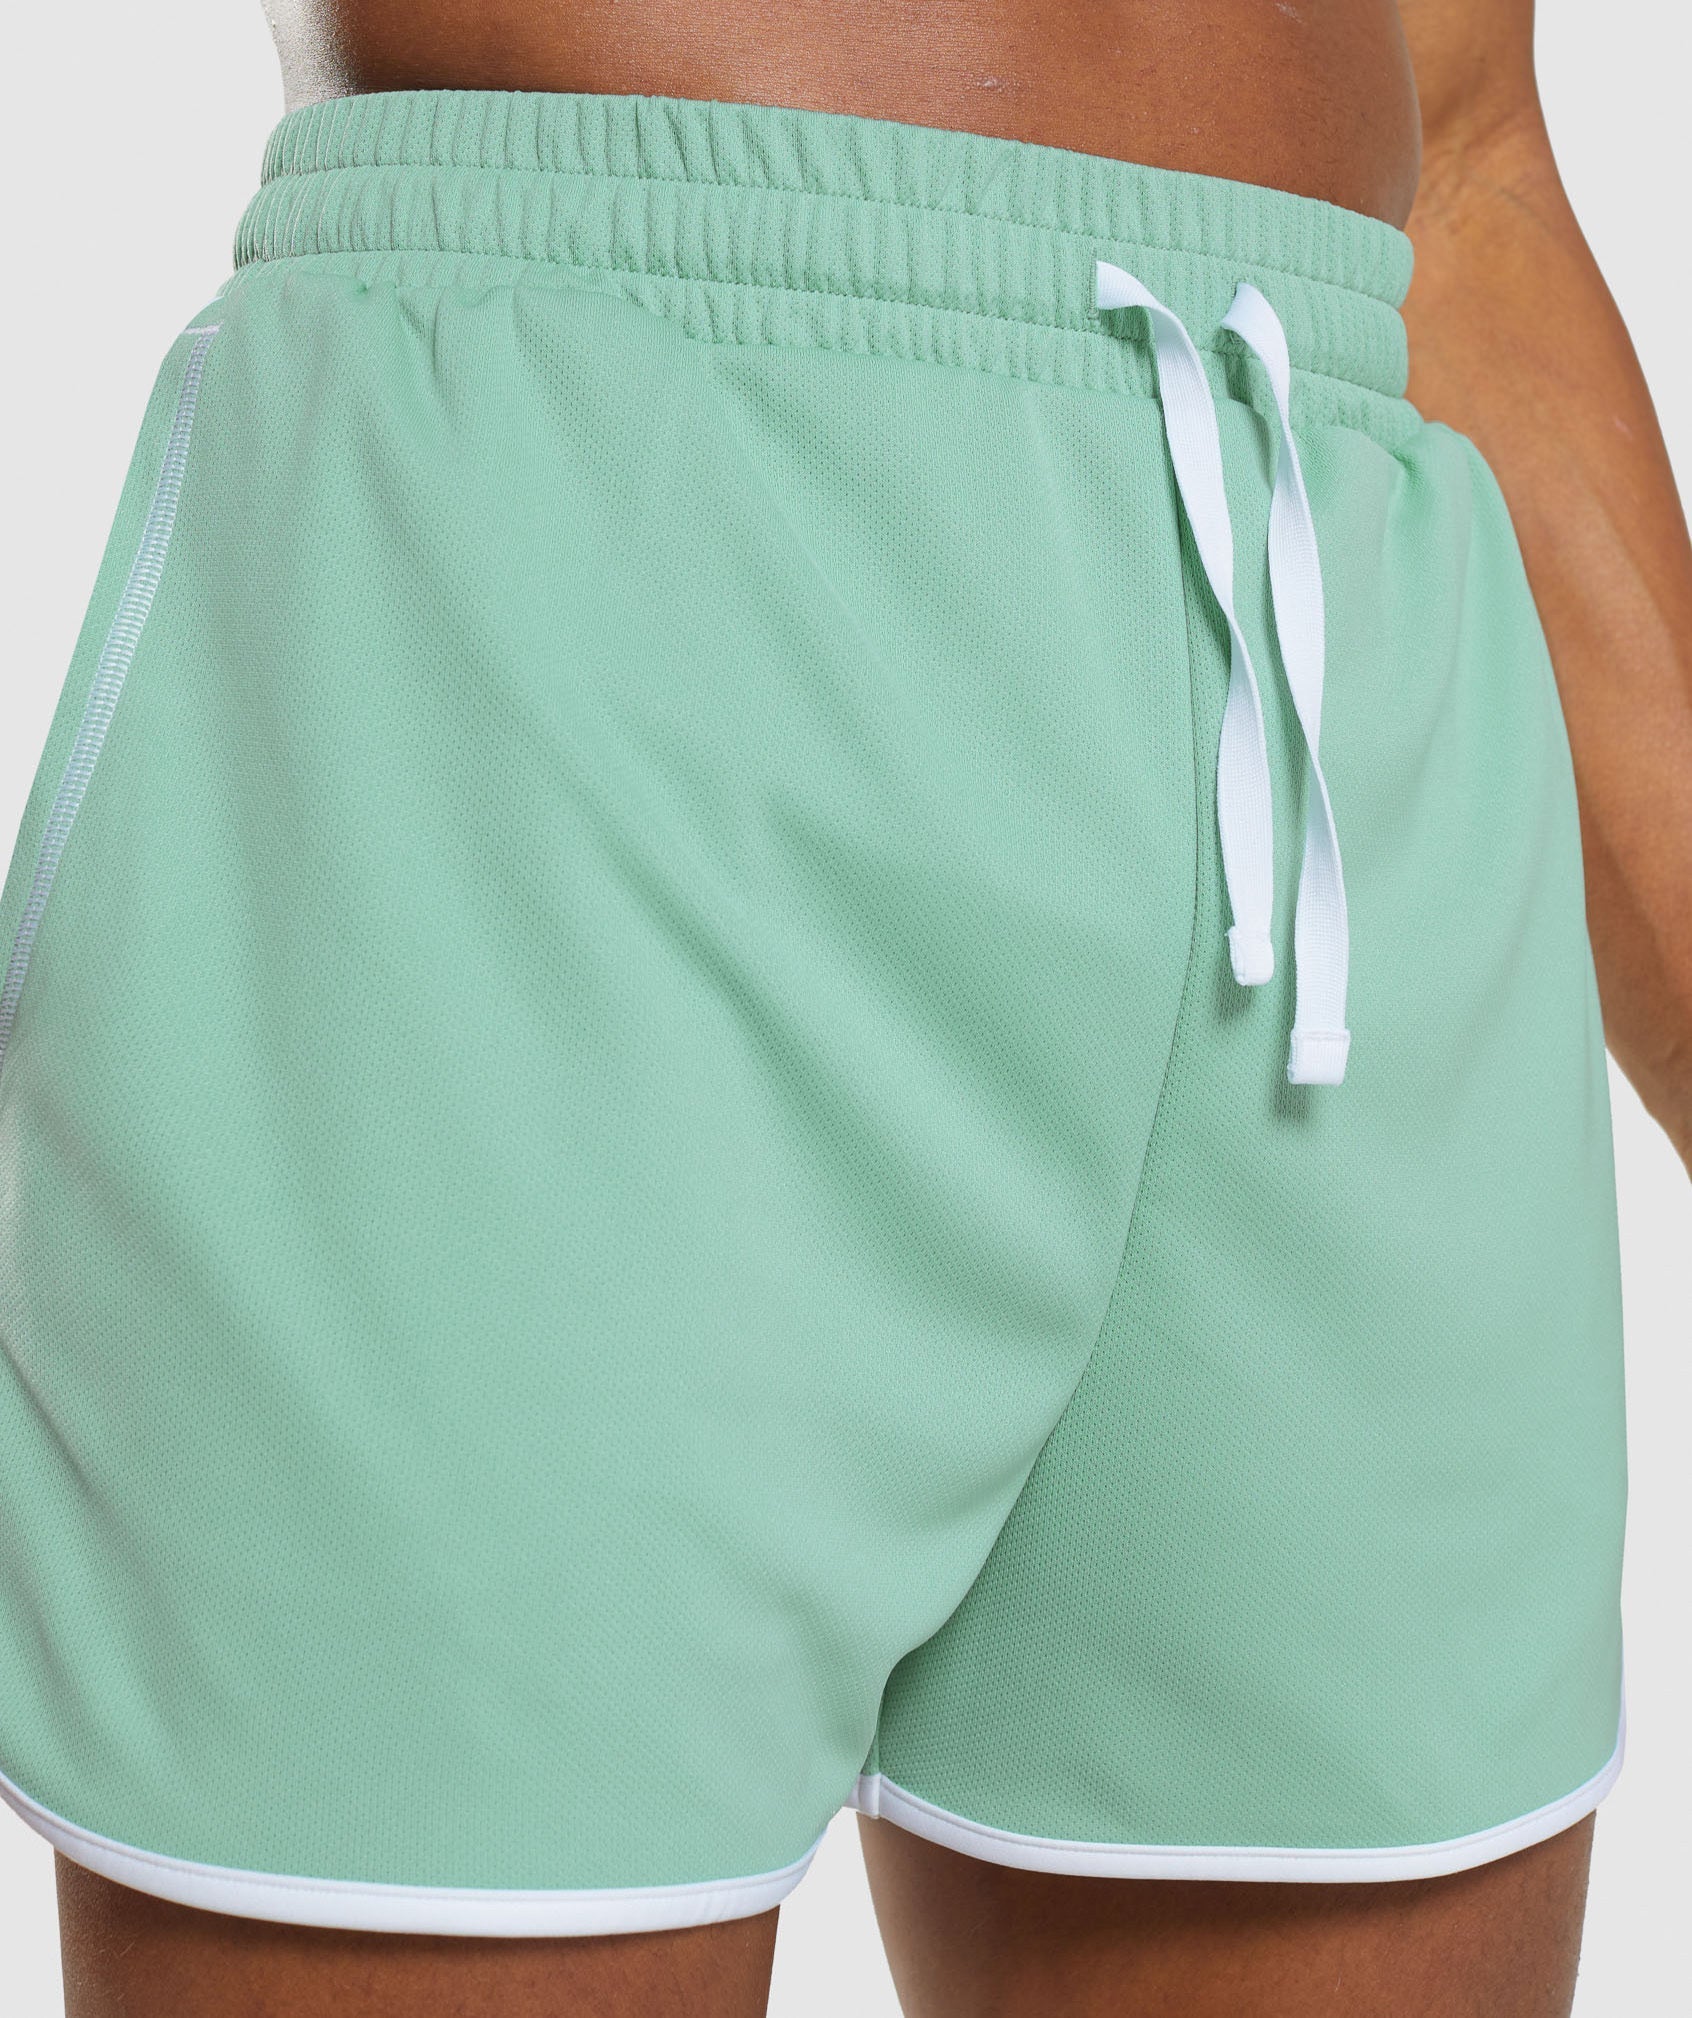 Recess 3" Shorts in Maya Blue/White - view 6